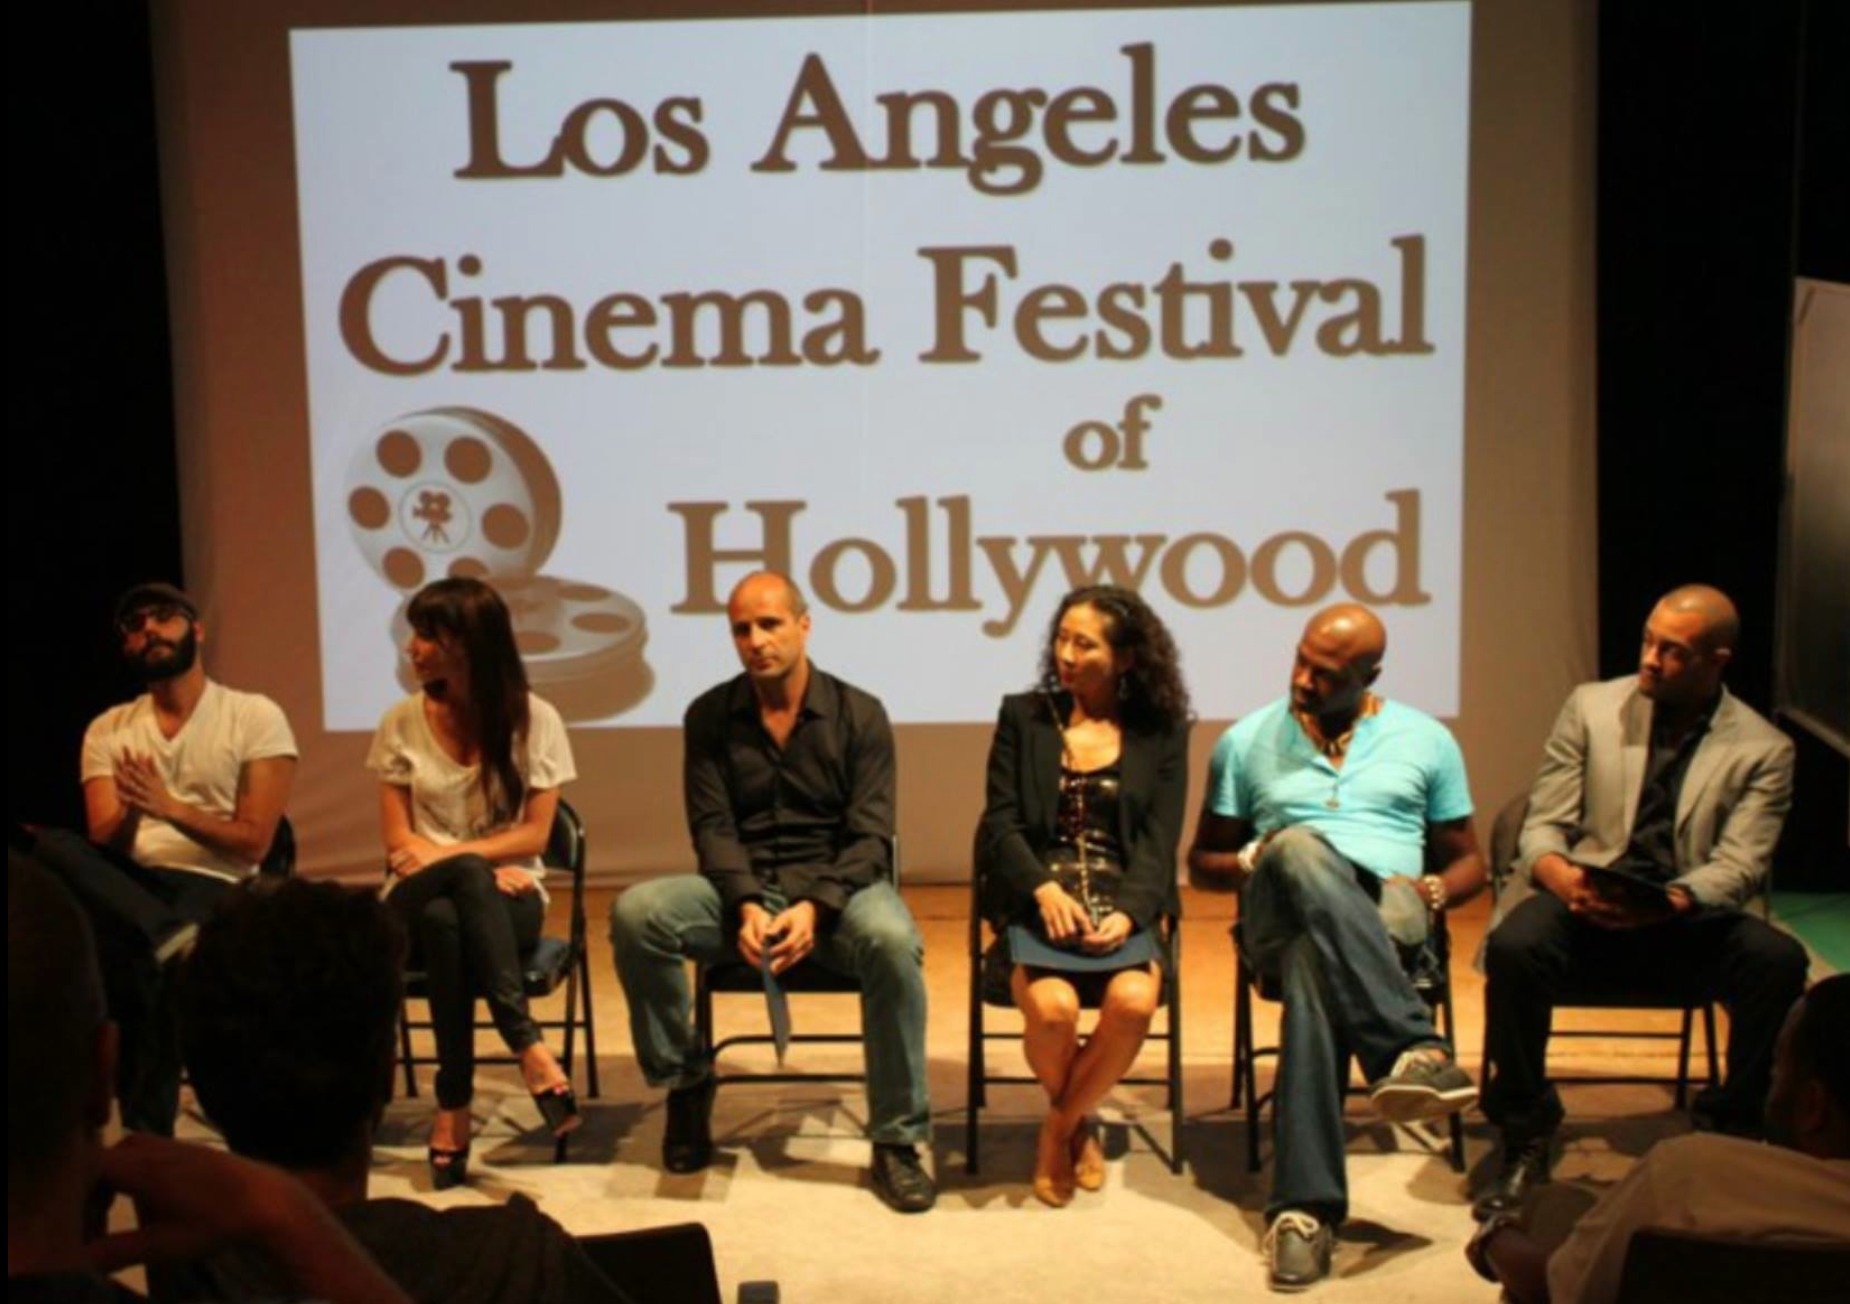 Los Angeles Cinema Festival of Hollywood - Novembre 2013